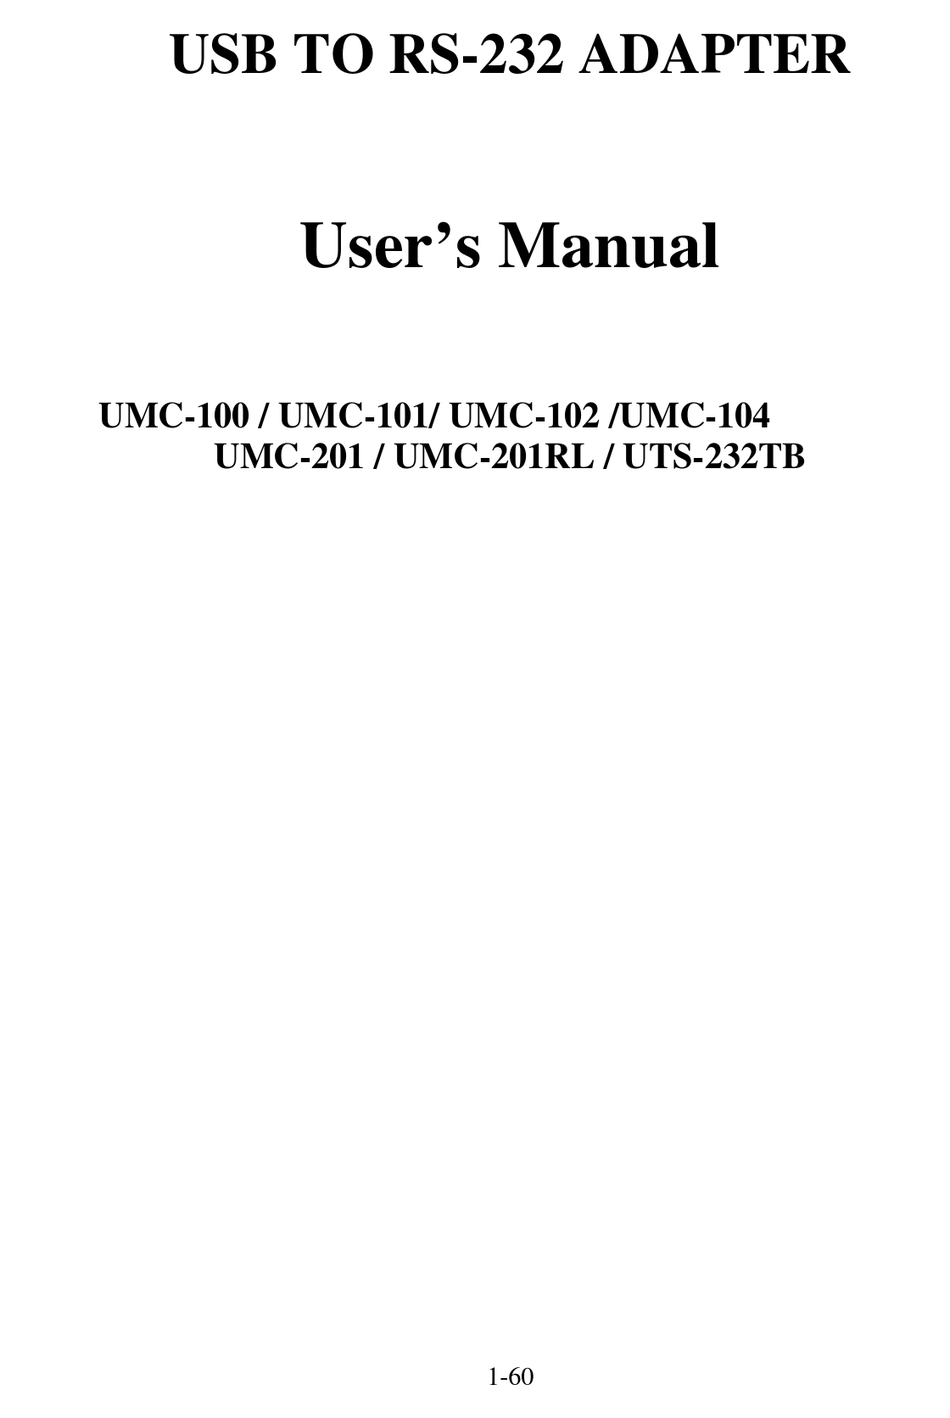 L-COM UMC-100 USER MANUAL Pdf Download | ManualsLib